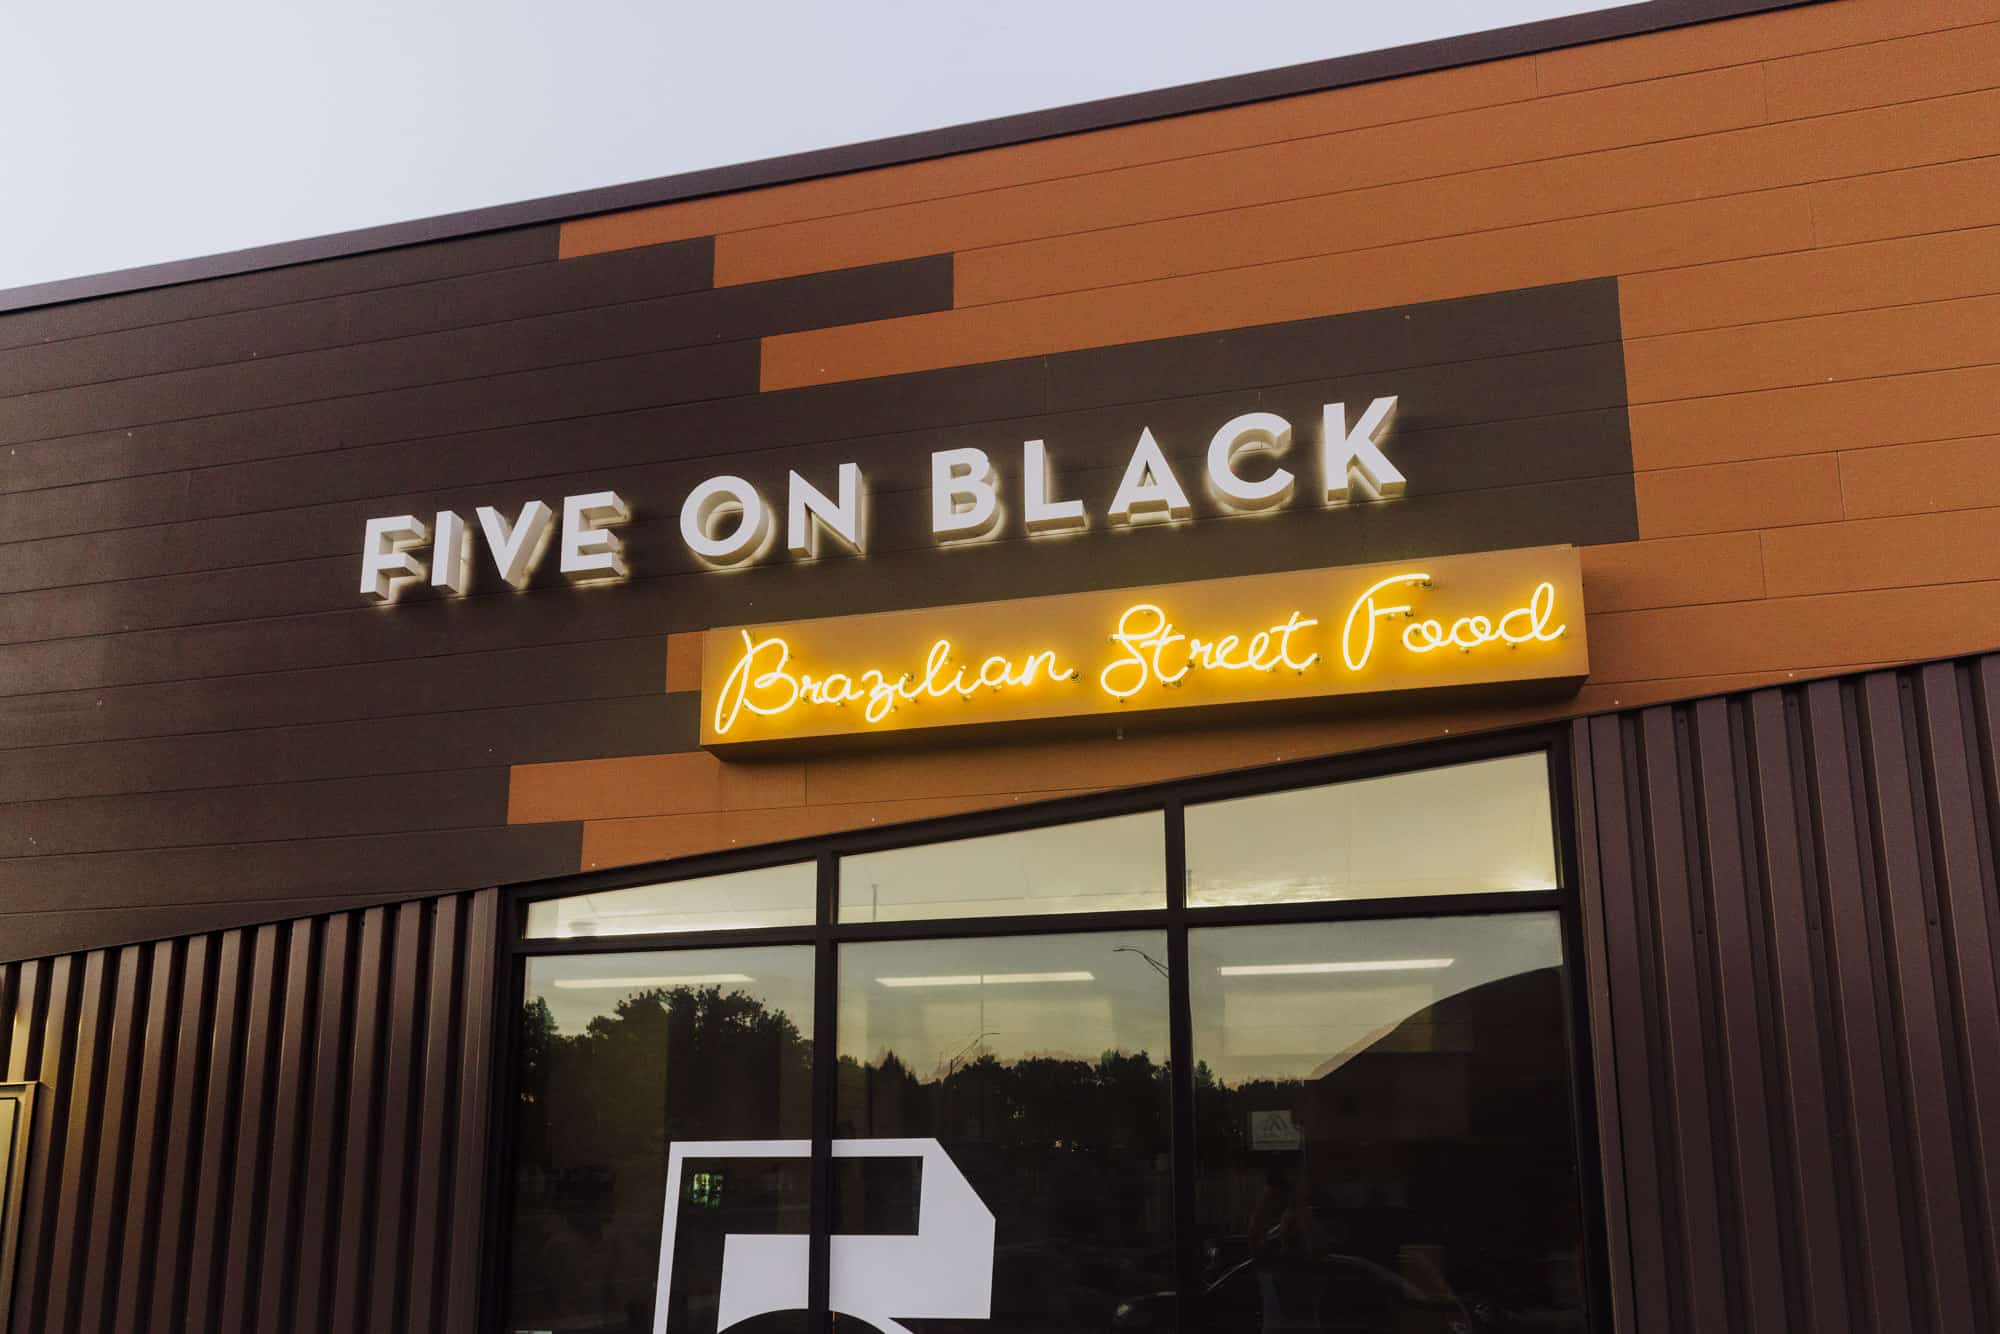 Five on Black restaurant in Great Falls MT